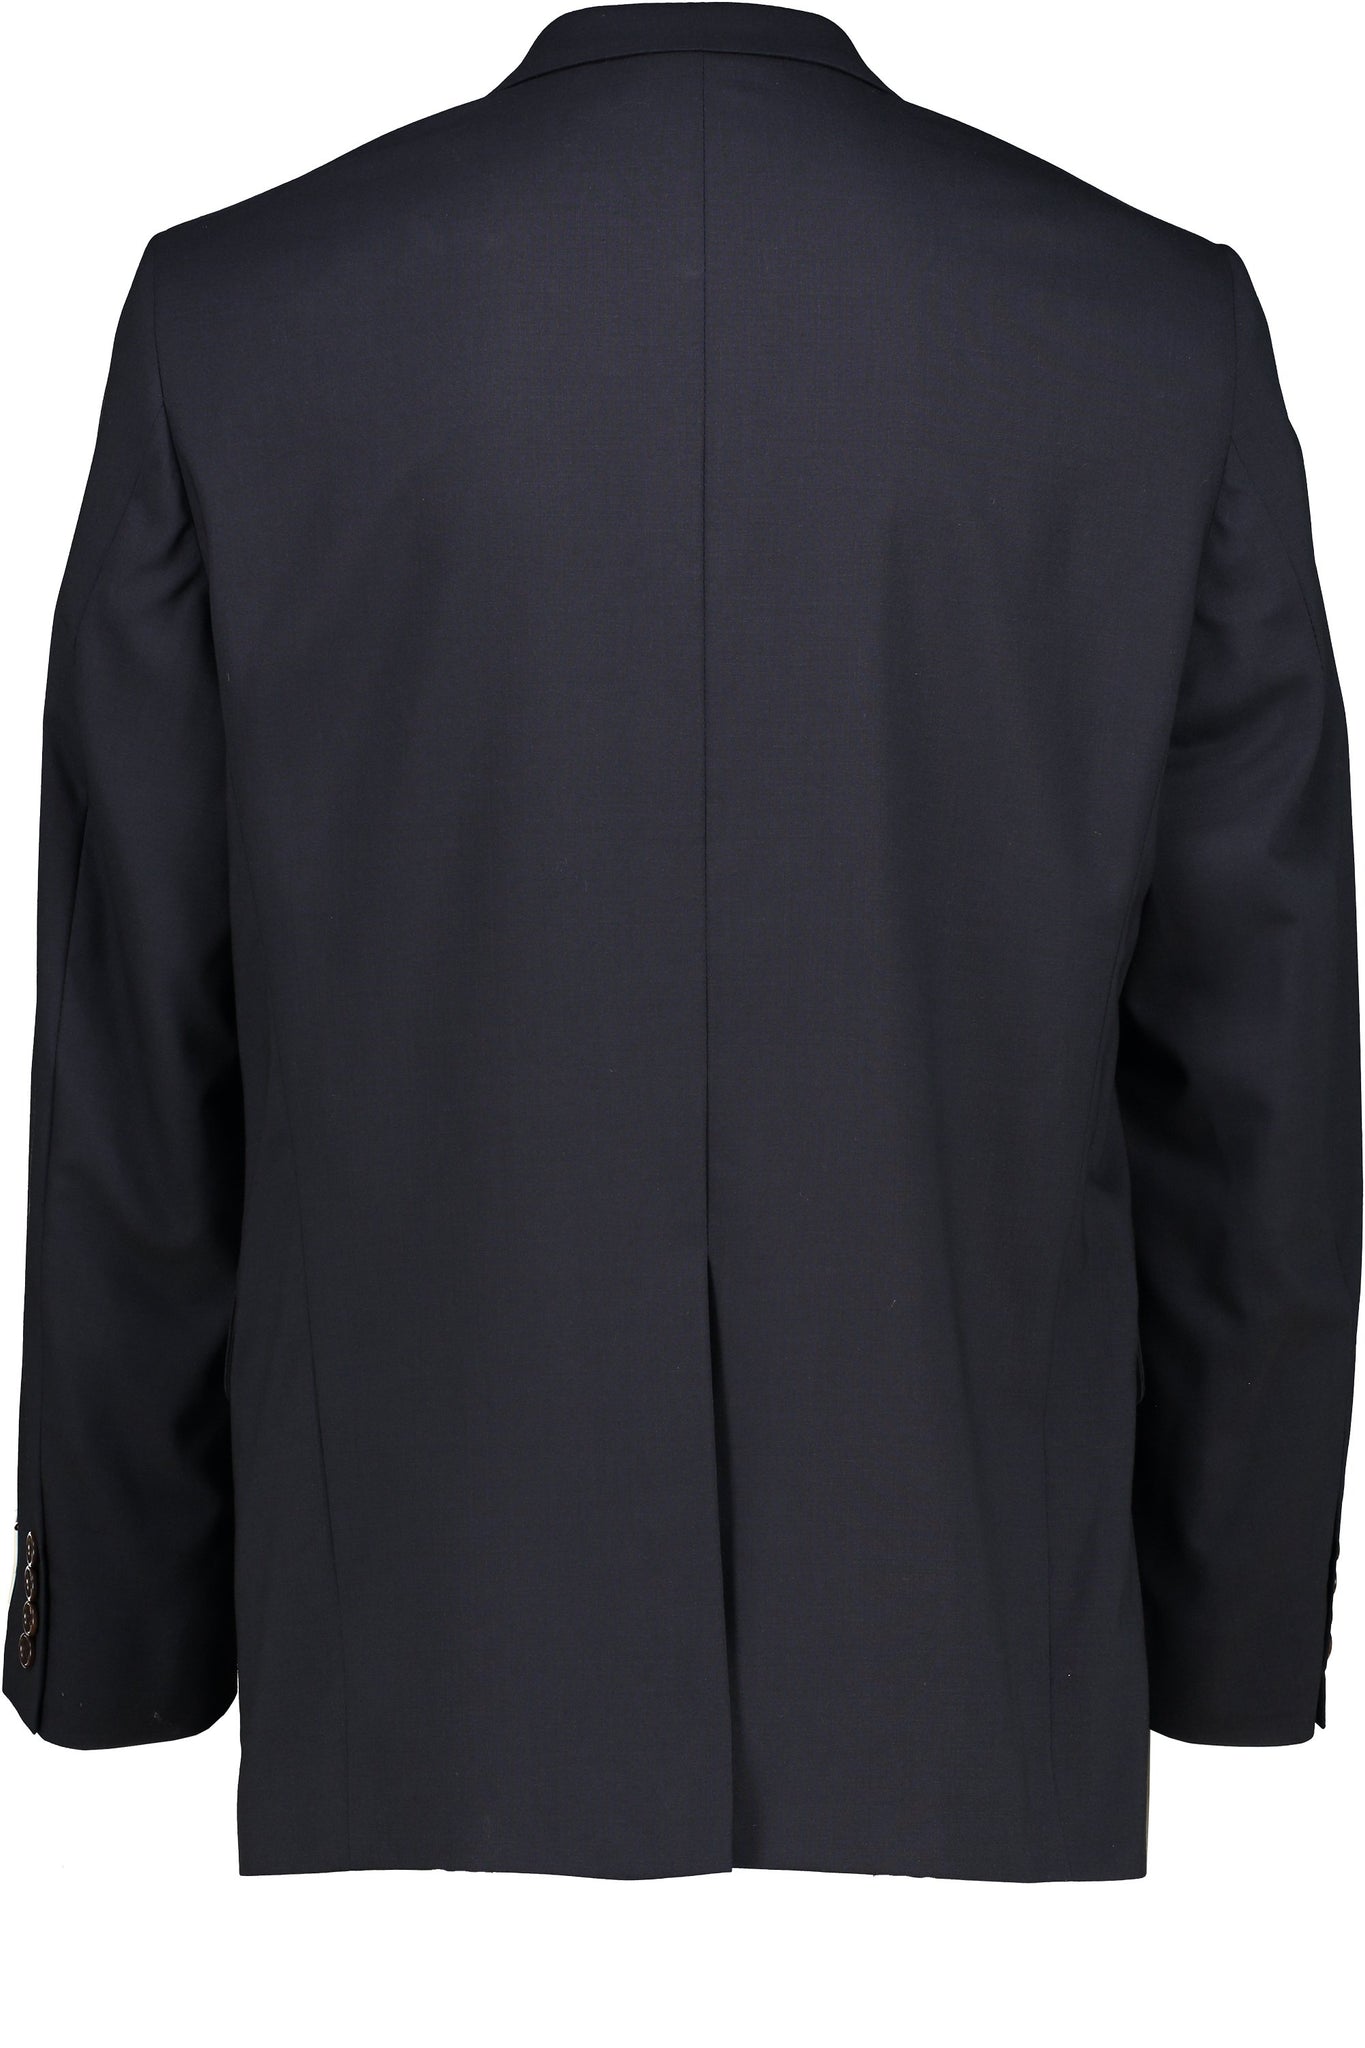 Classic Fit Navy H-Tech Wool Suit Separate Jacket -  Hardwick.com